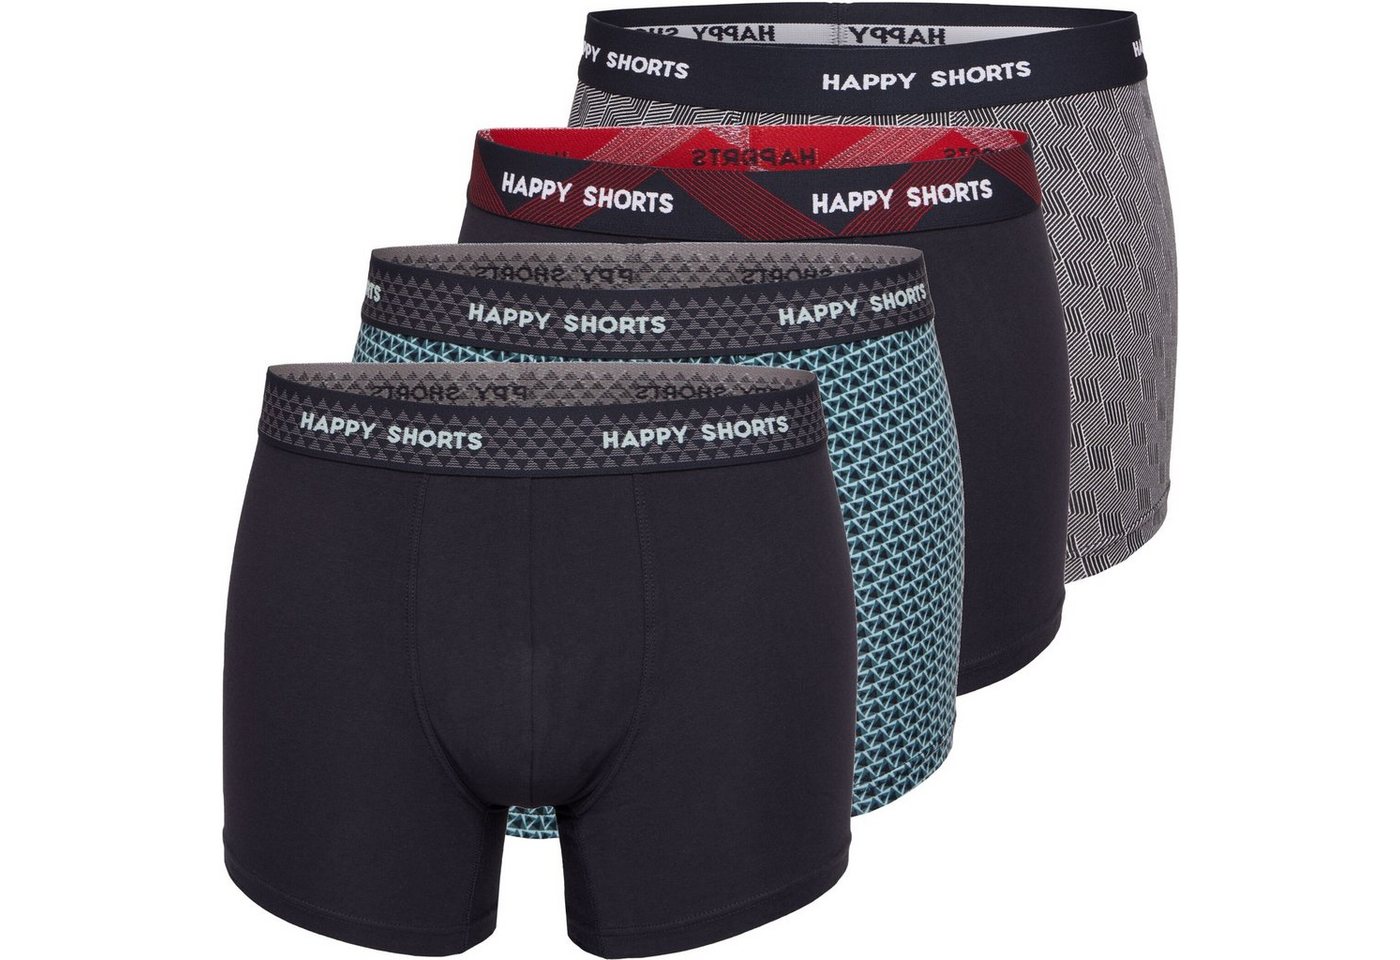 HAPPY SHORTS Trunk 4er Happy Shorts Pants Jersey Trunk Herren Boxershorts Pant Sparpack (1-St) von HAPPY SHORTS